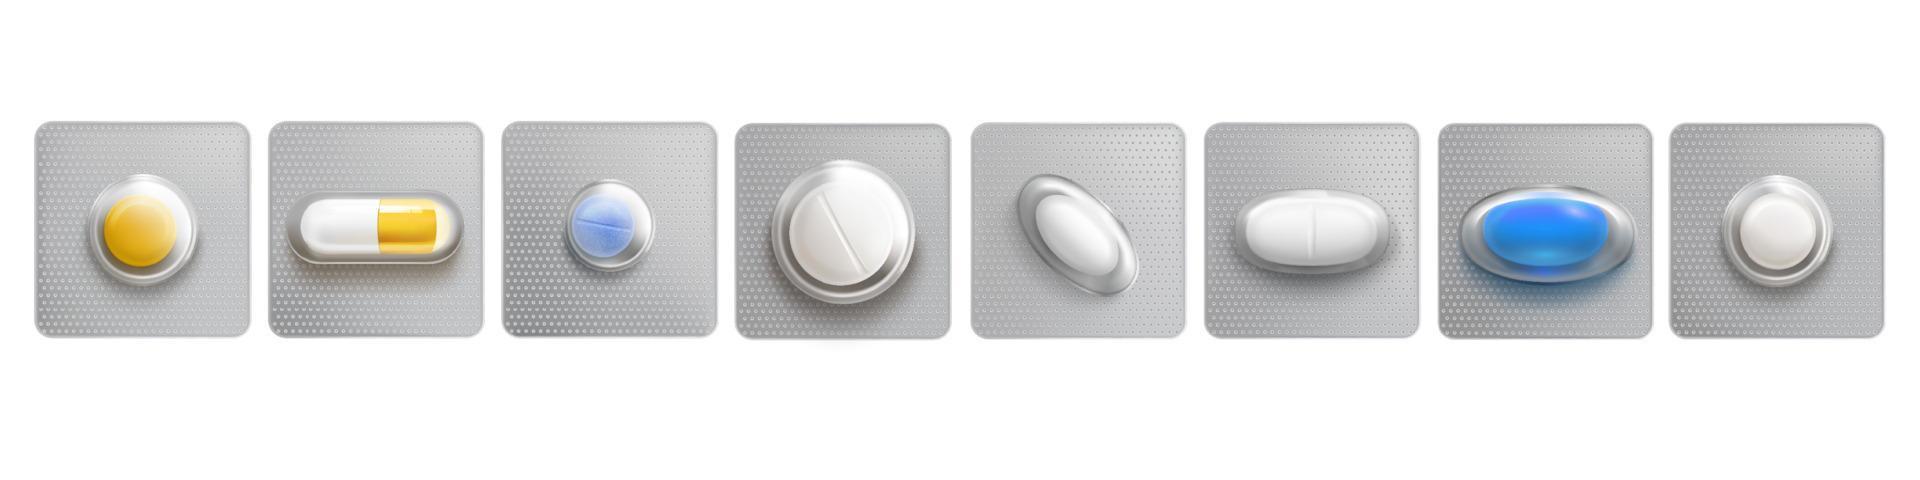 Blister mit einer Pille oder Tablette in der Packung, Medizin vektor